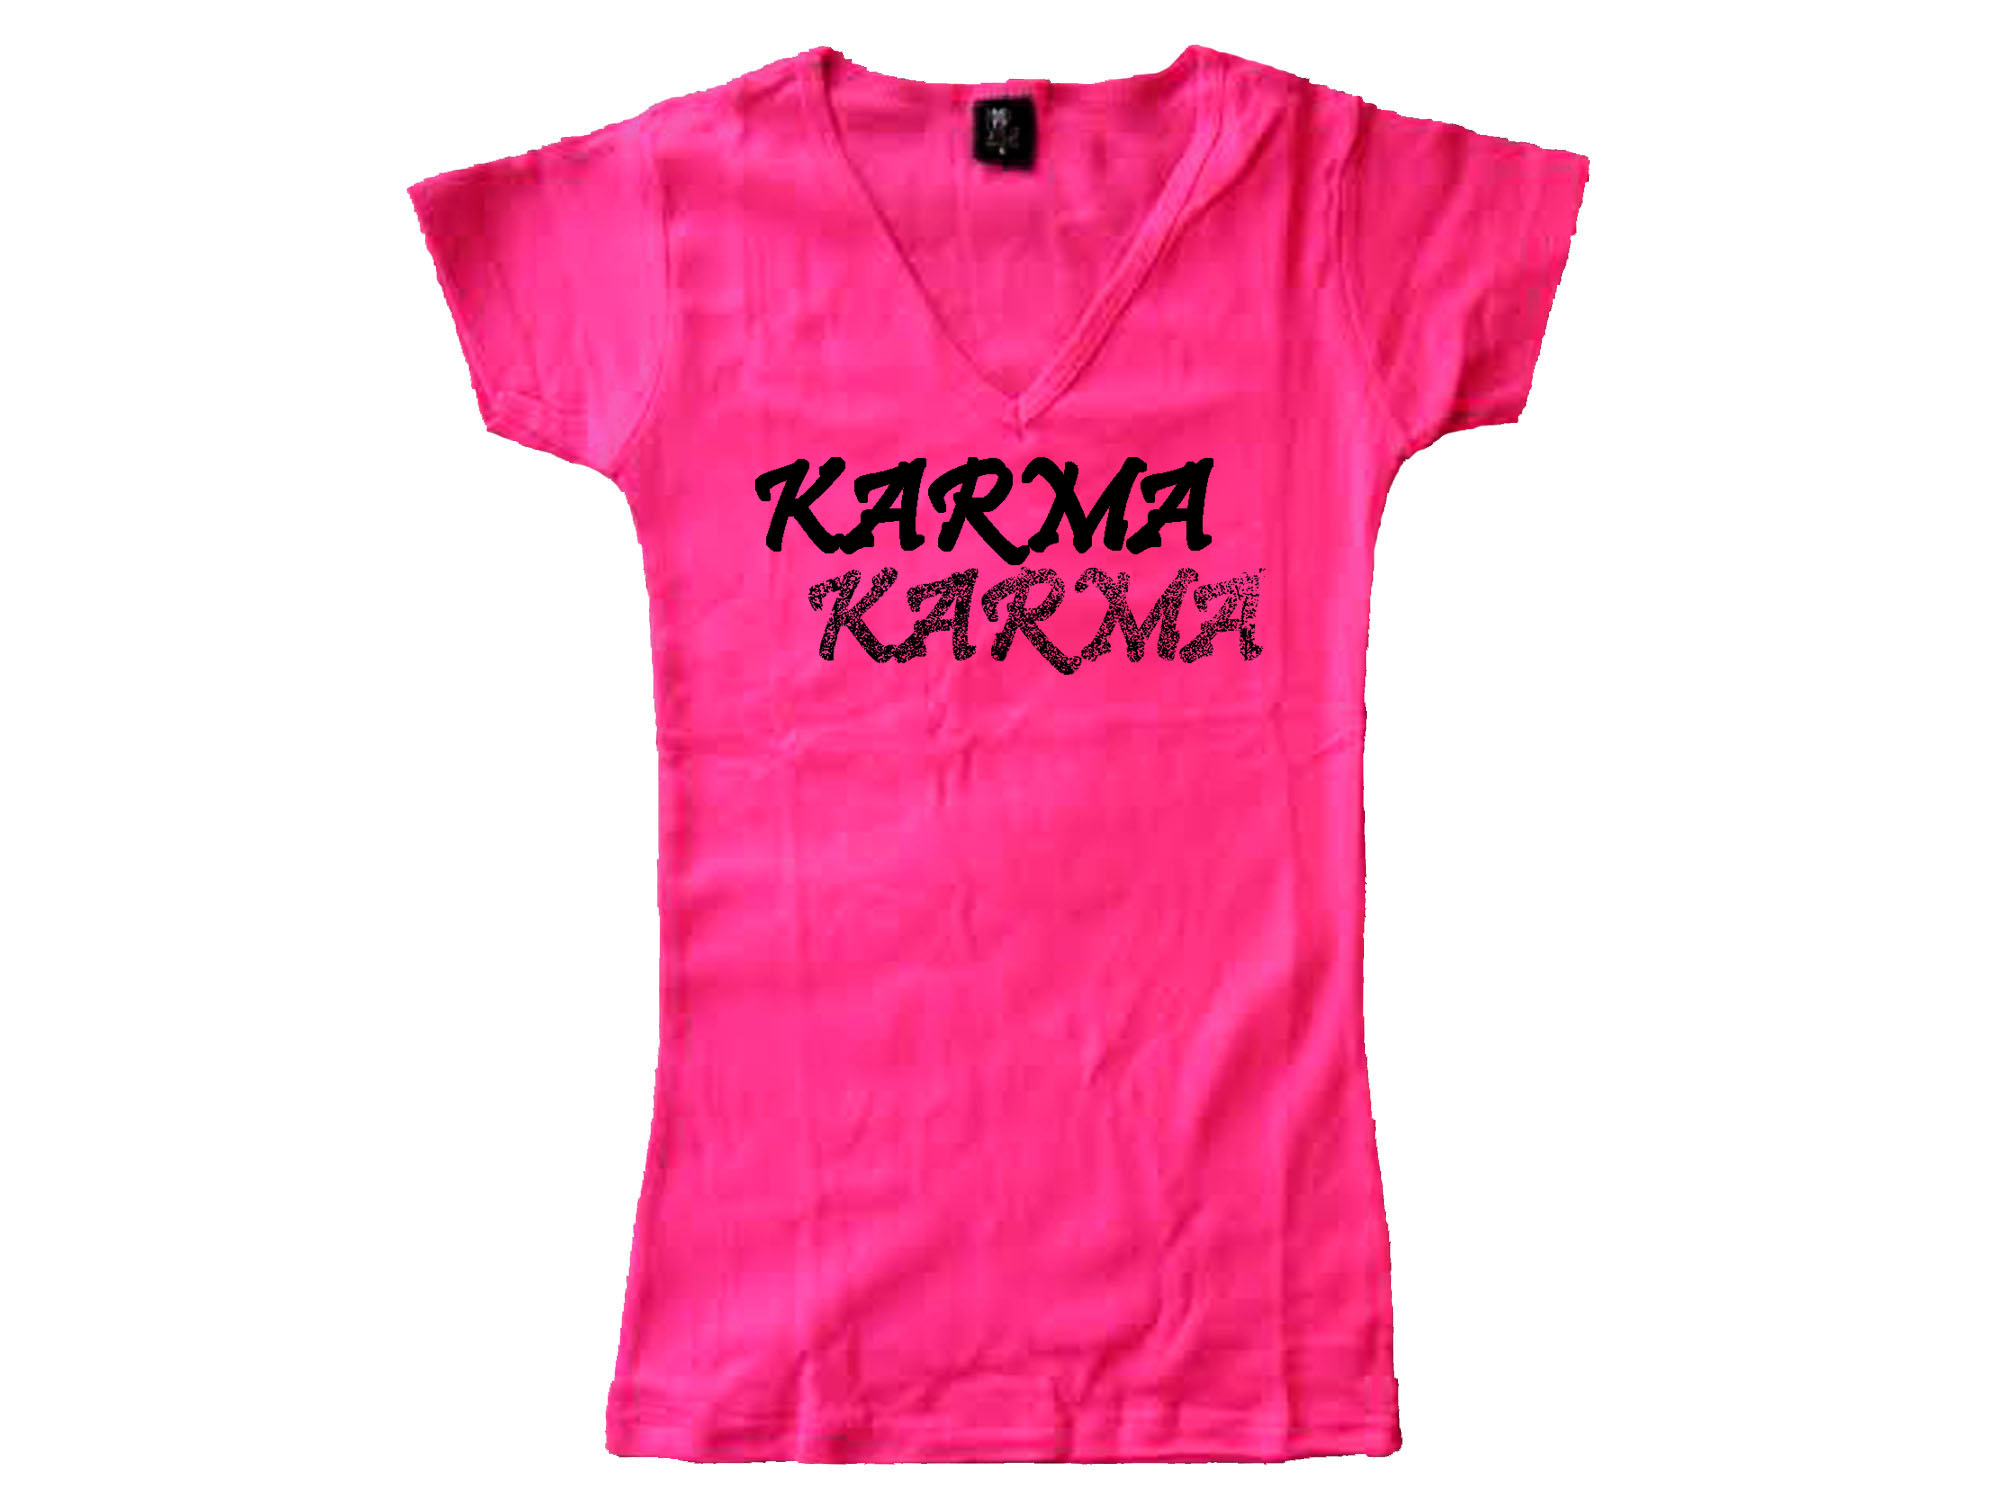 Karma yoga wear meditation woman pink t shirt